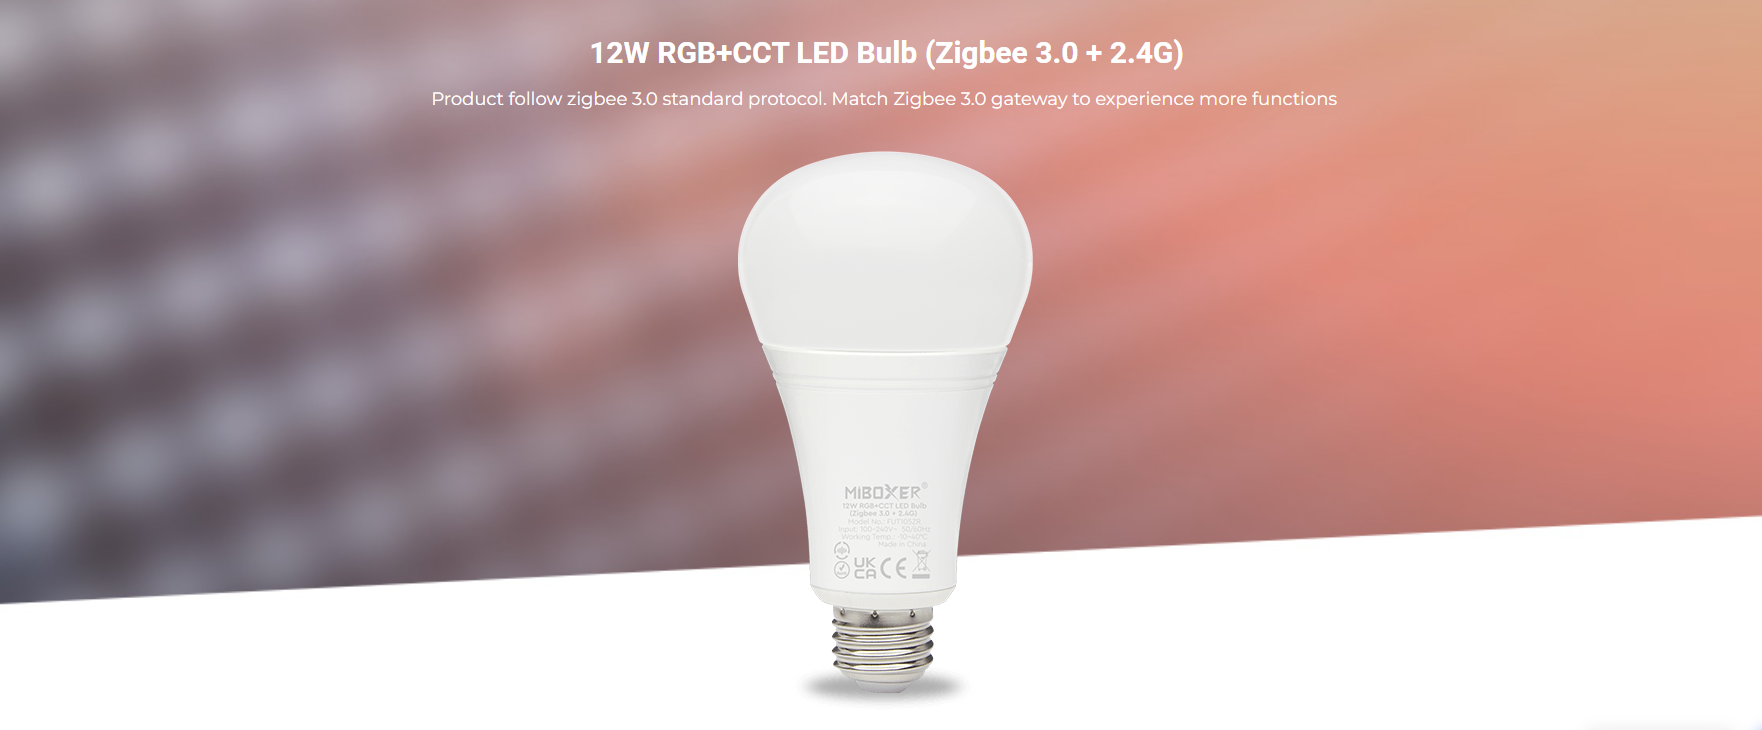 12W RGB+CCT LED Bulb (Zigbee 3.0 + 2.4G)